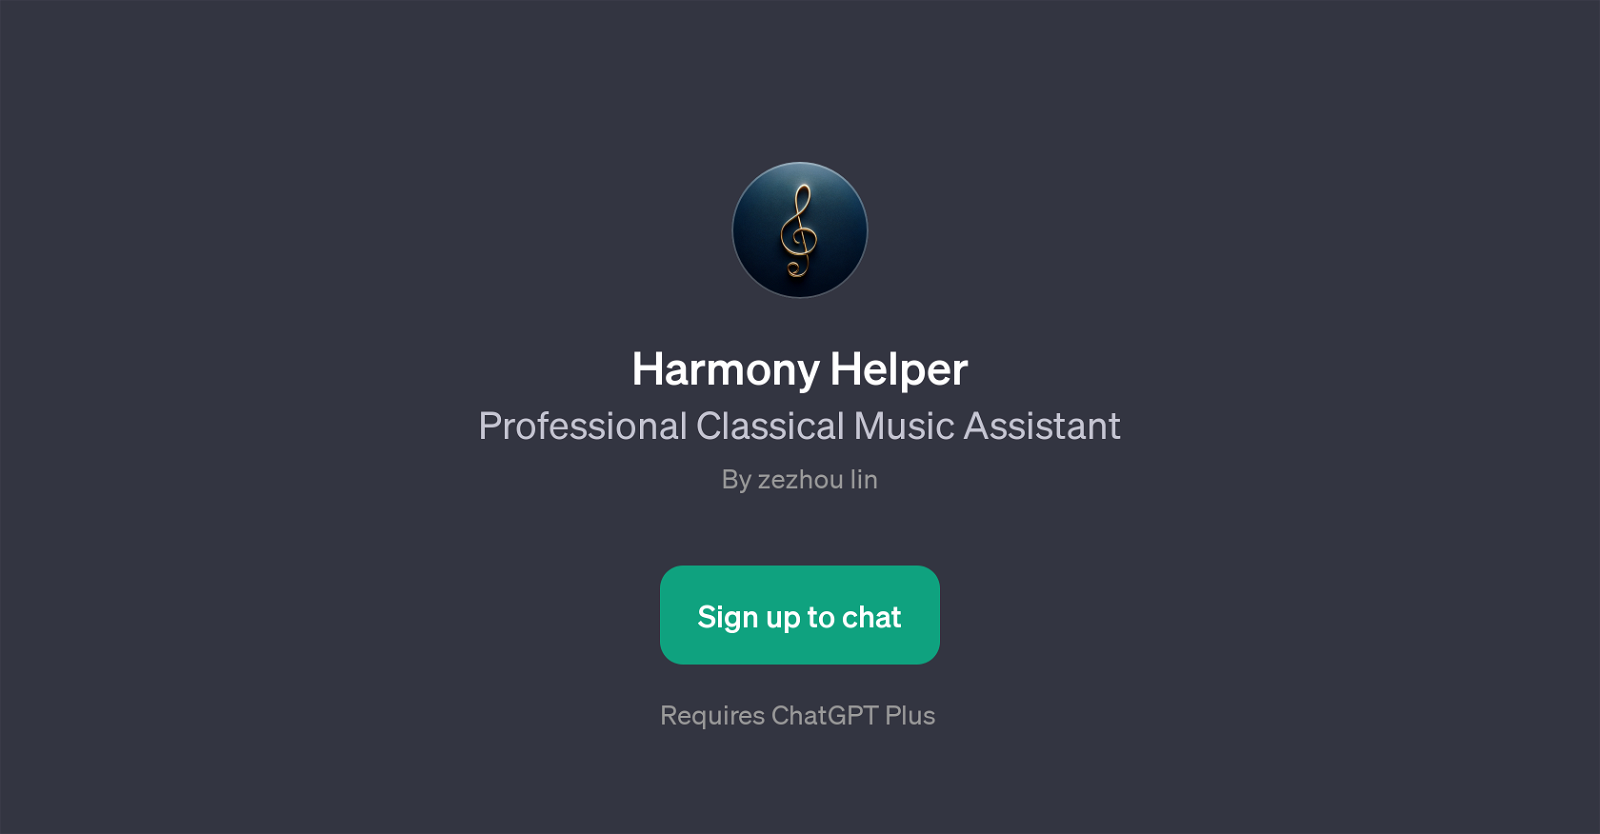 Harmony Helper website